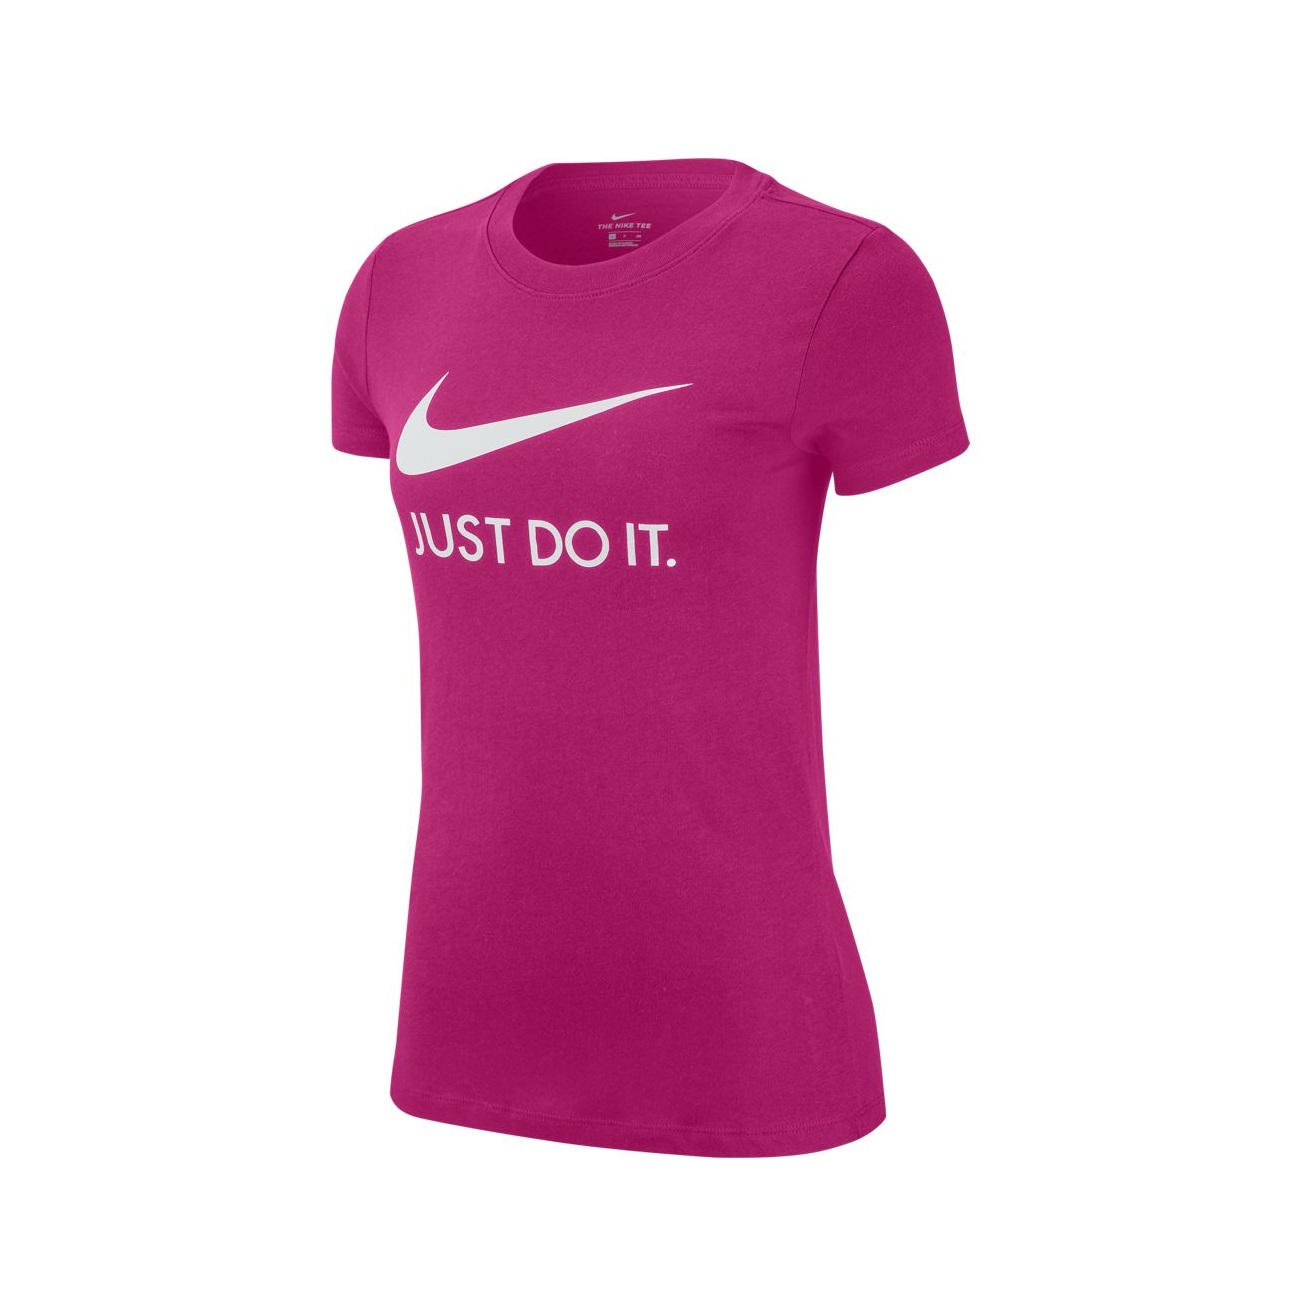 Camiseta de manga corta - Mujer - Nike Sportswear Rosa - CI1383-616 ferrersport.com | online deportes